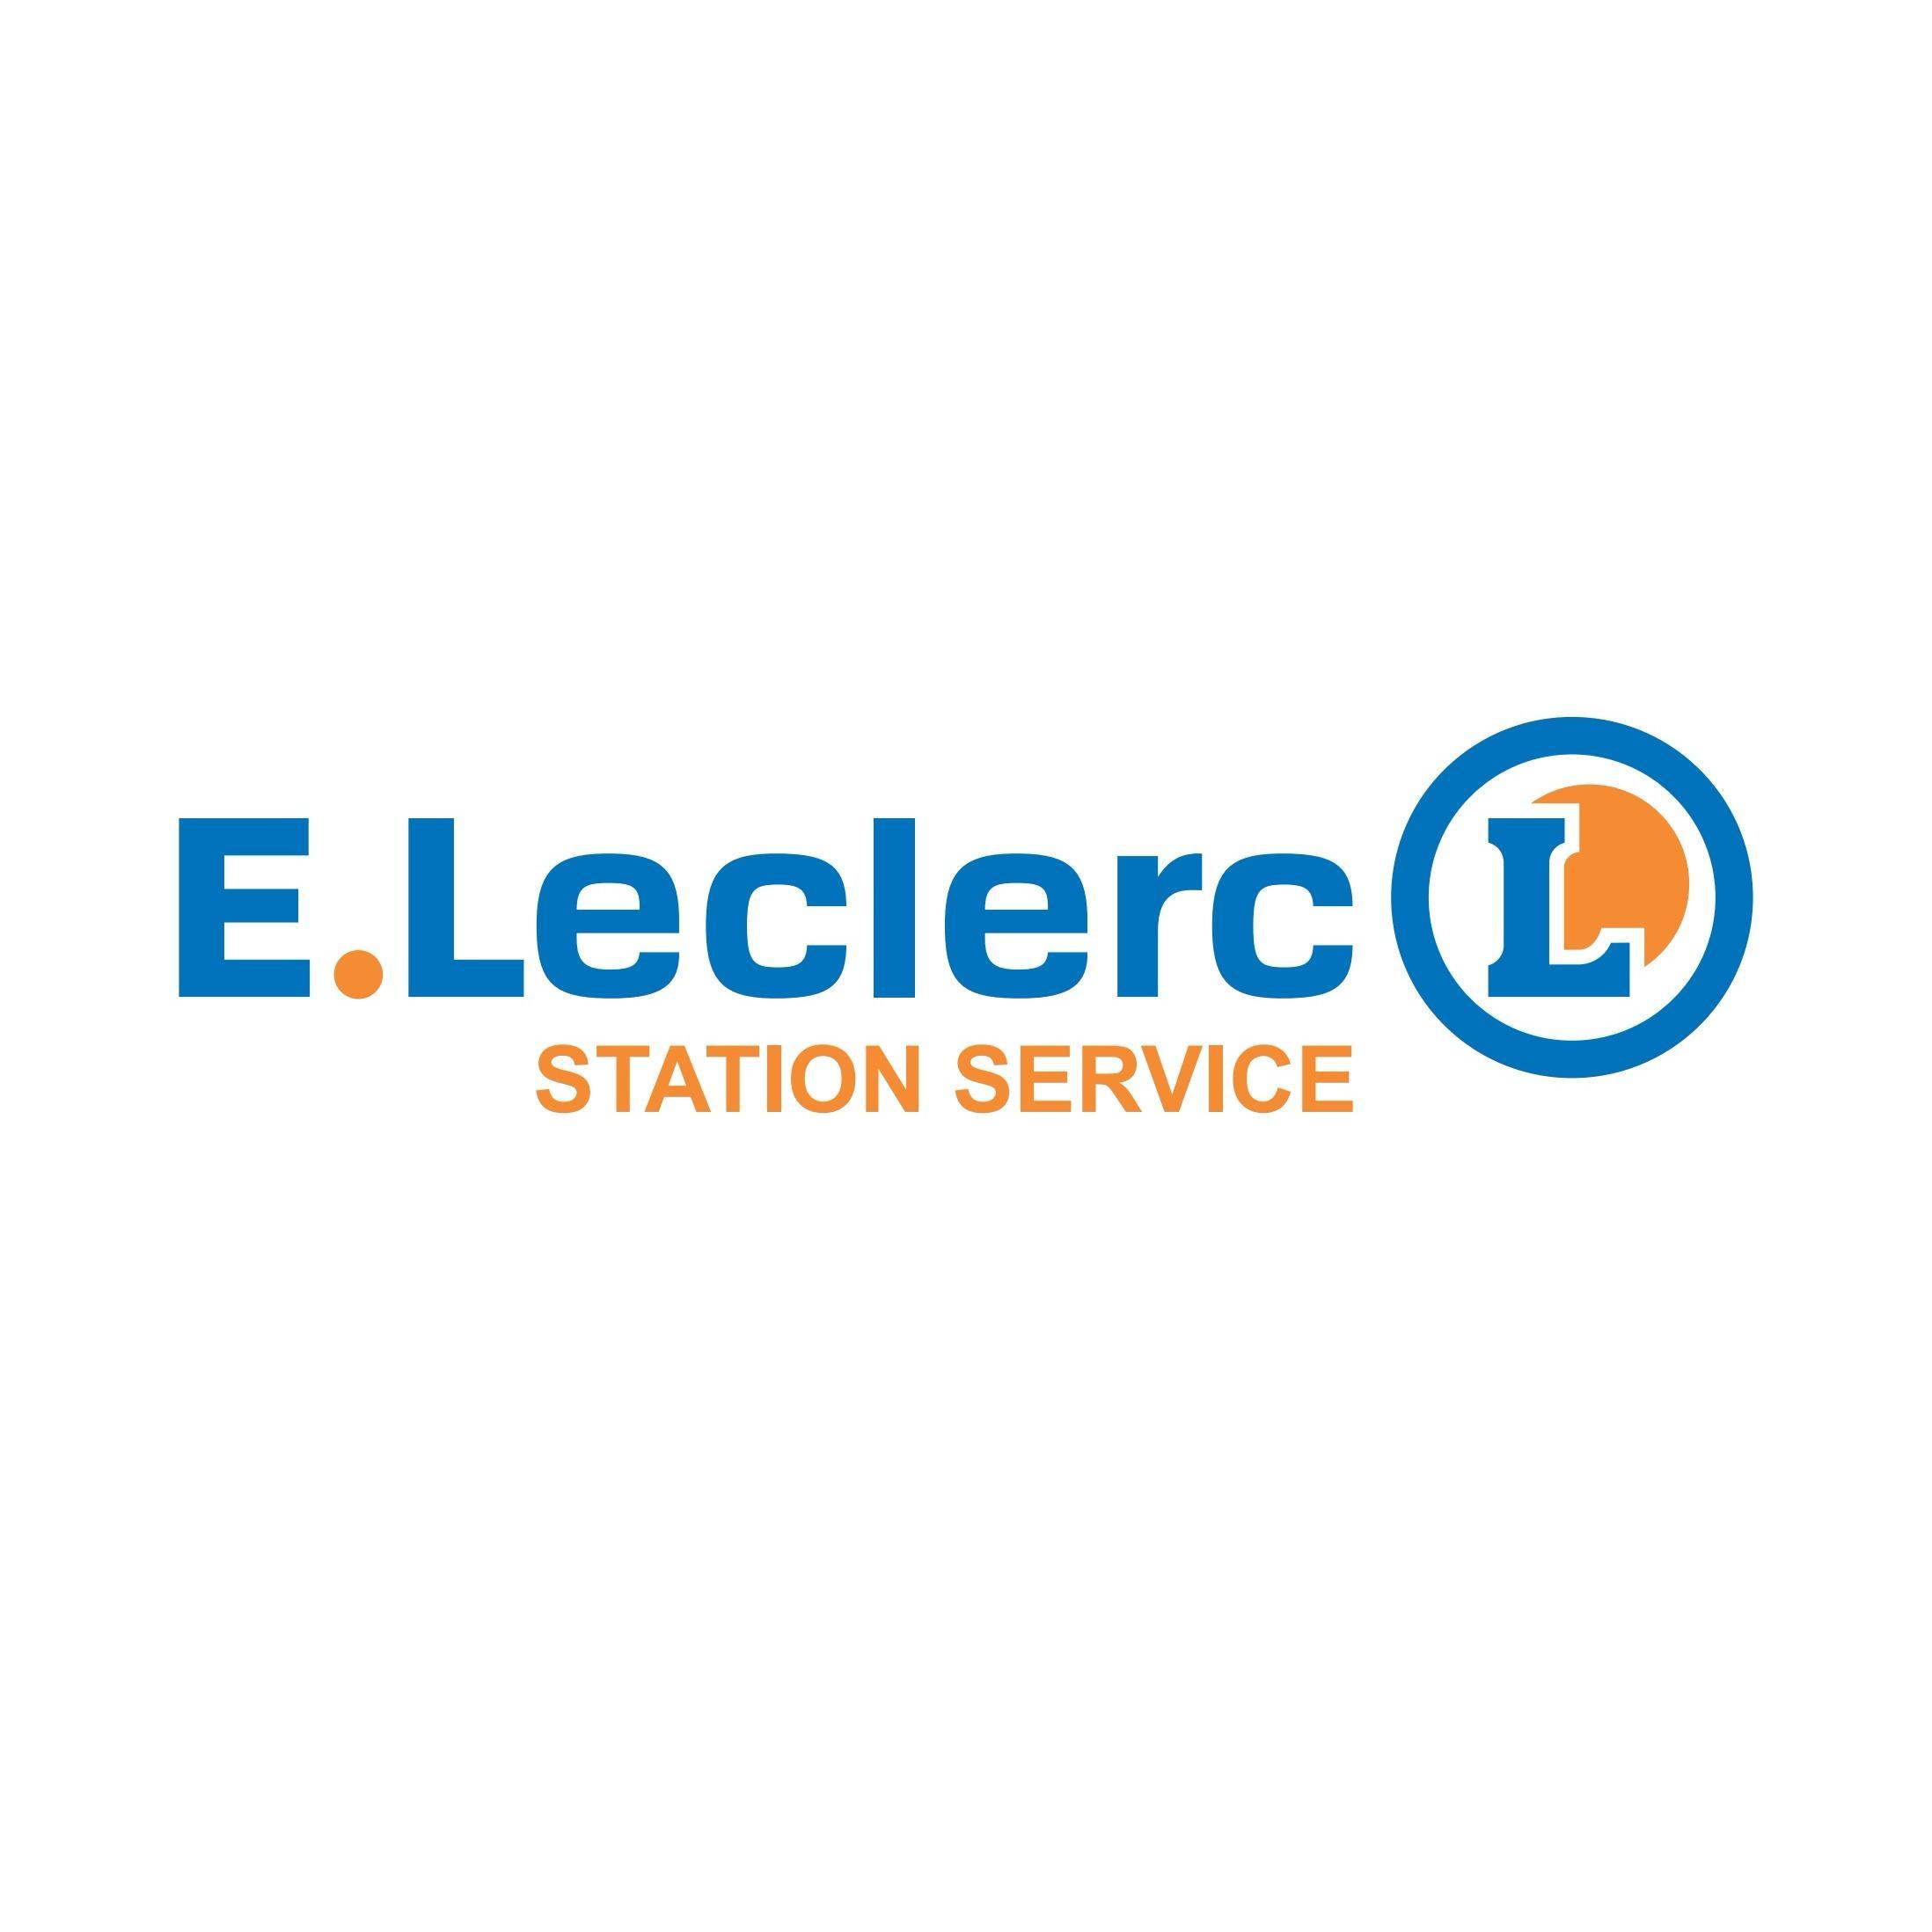 E.leclerc Station Service La Seyne Sur Mer